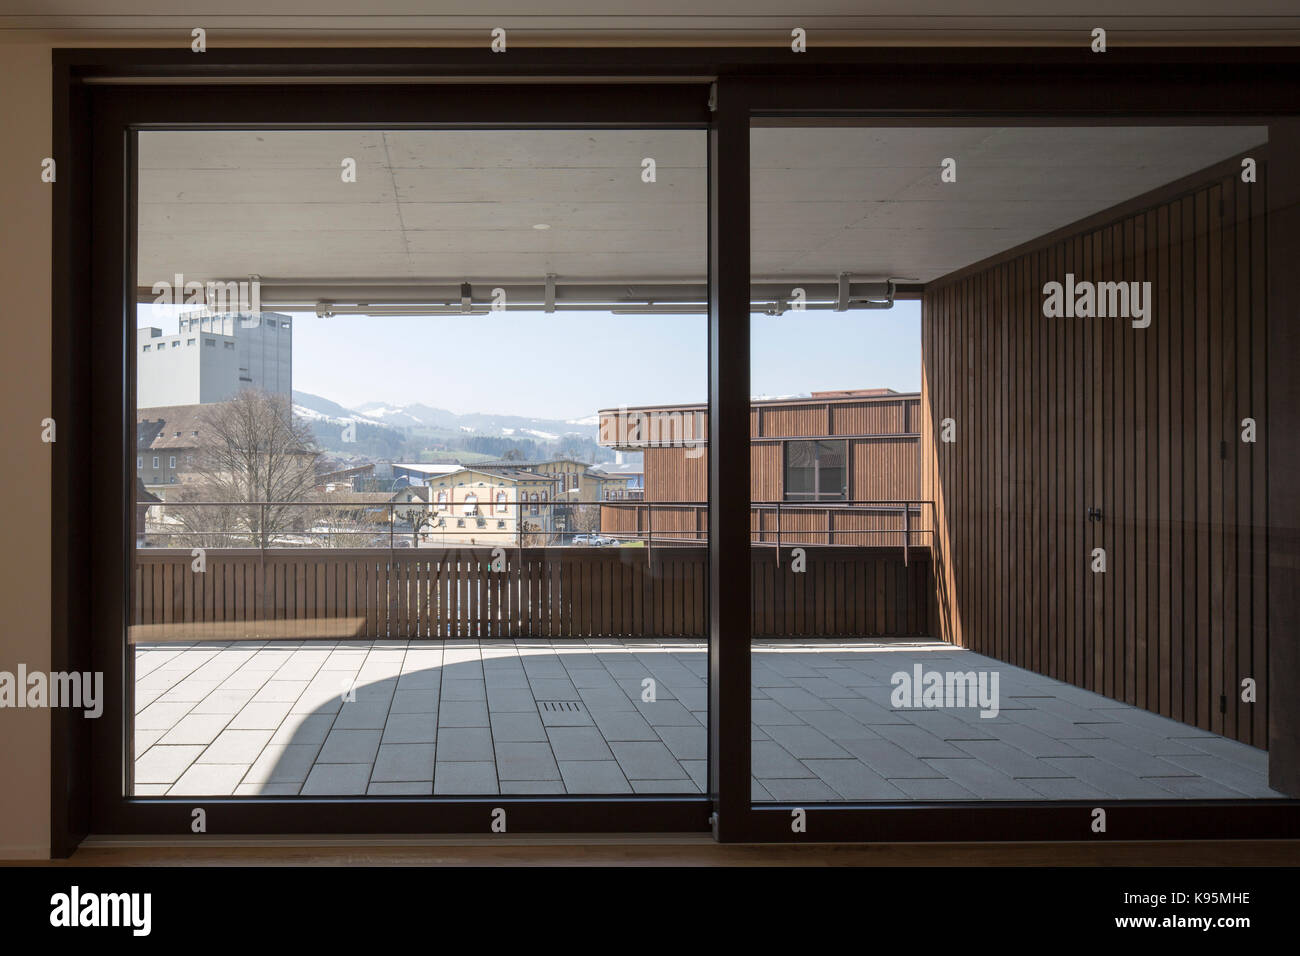 View through to balcony. Housing estate Malters, Malters, Switzerland. Architect: Diener & Diener, 2016. Stock Photo